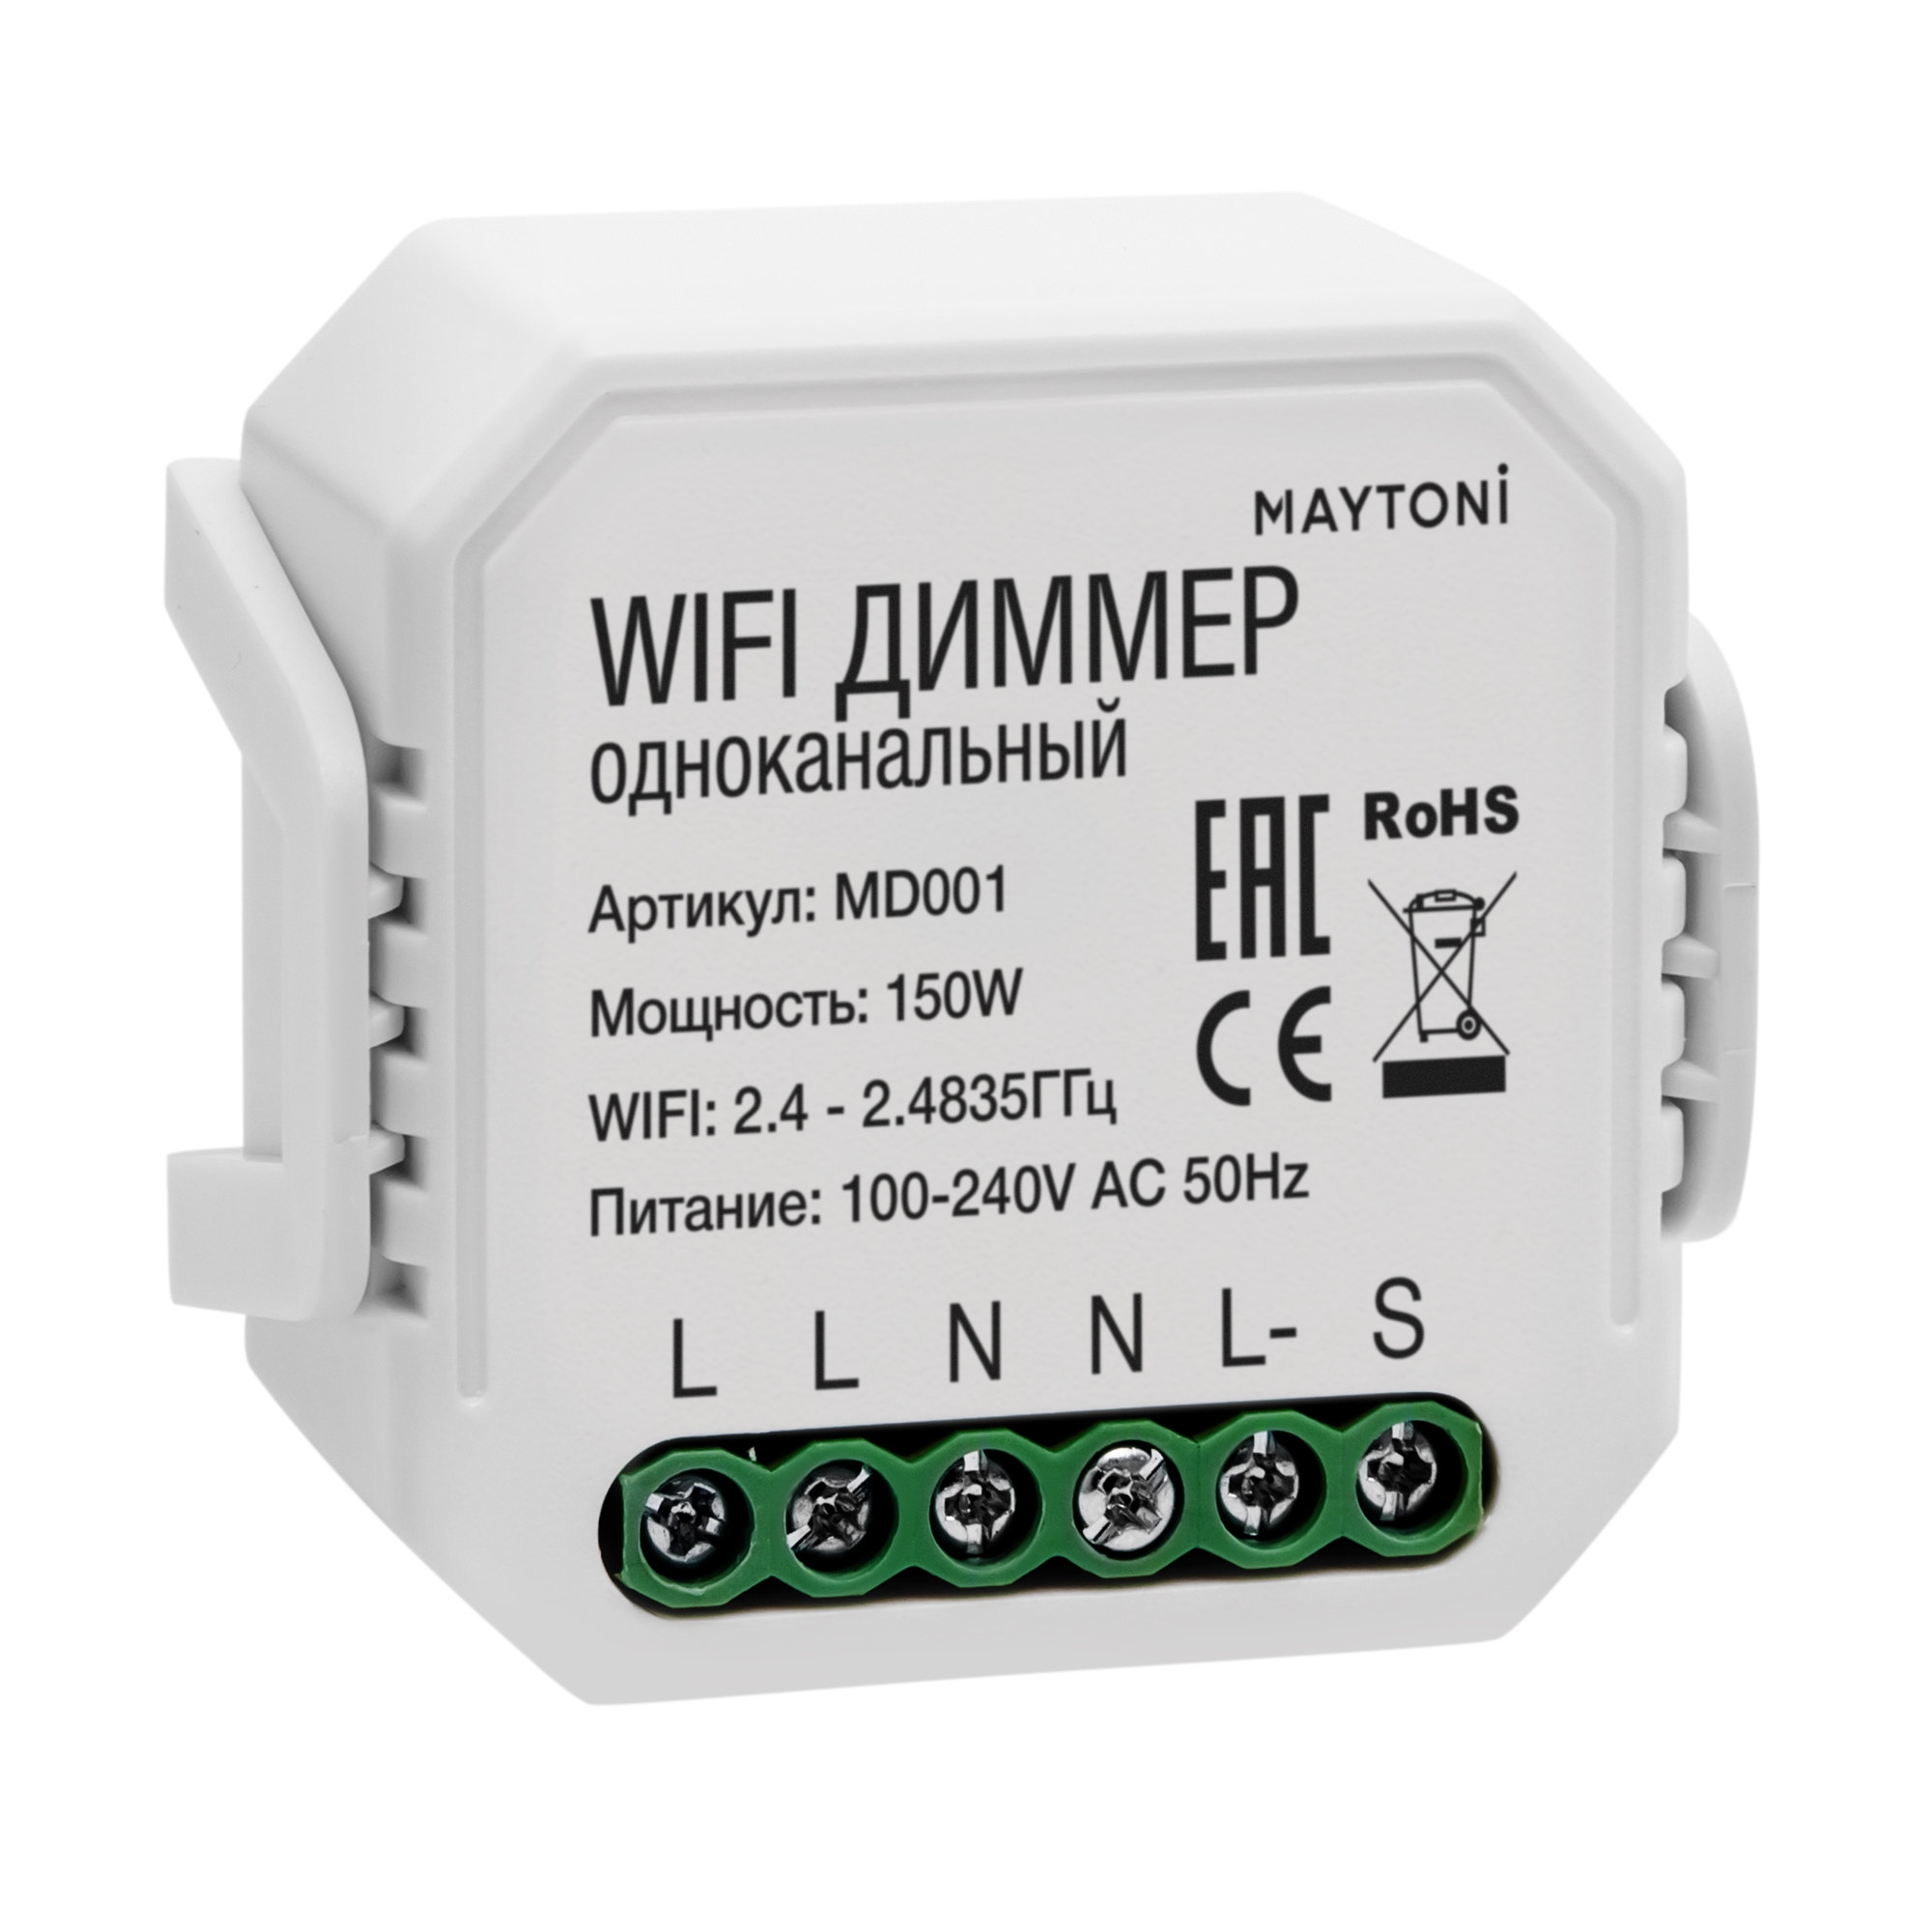 Wi-Fi диммер одноканальный 150W MD001